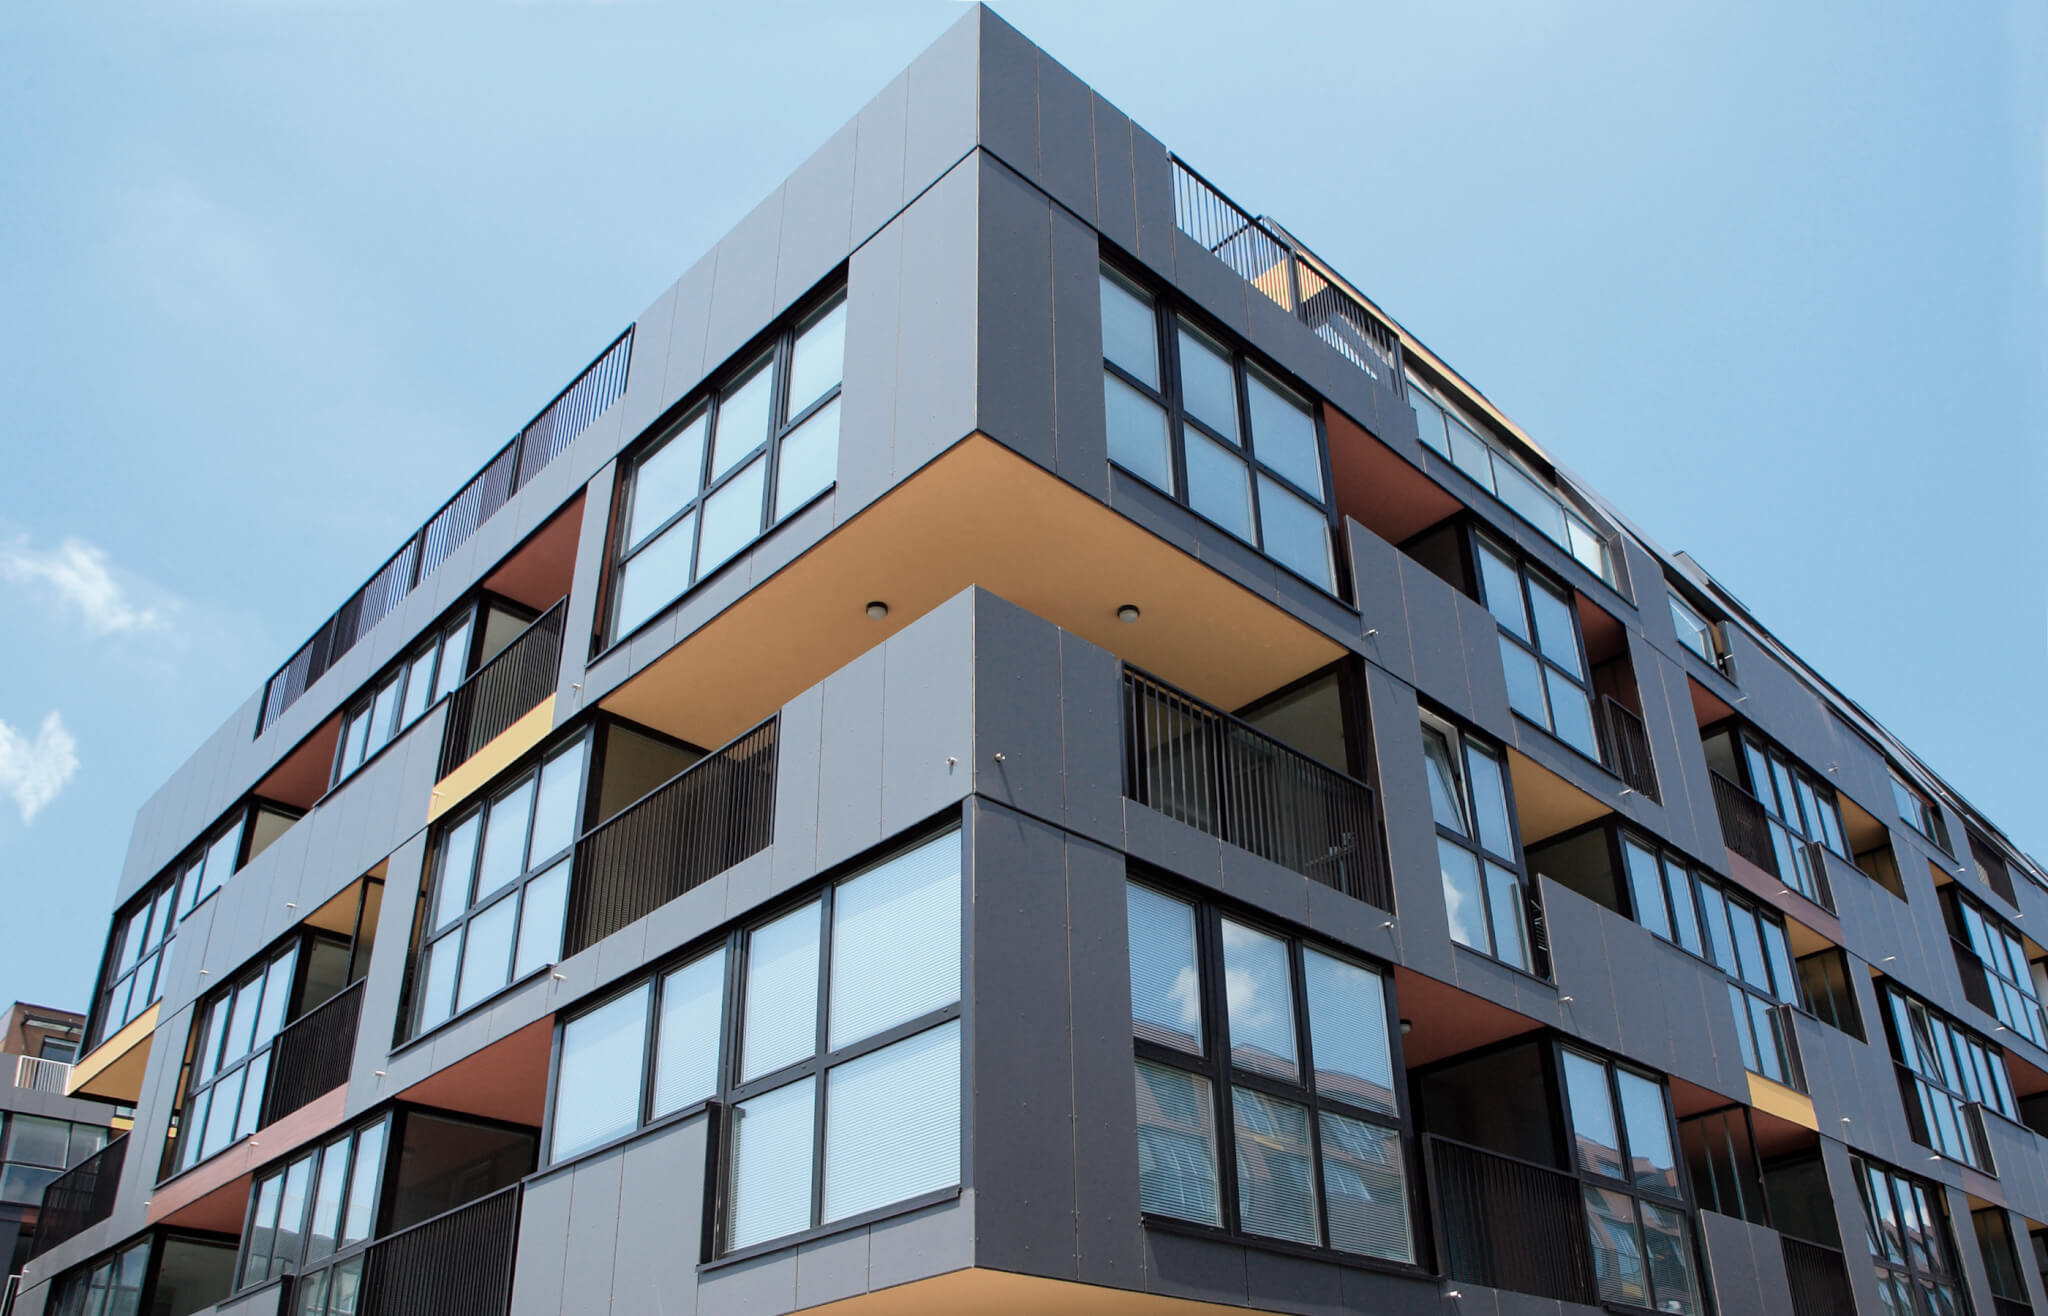 Modular building ‘the future for social housing’